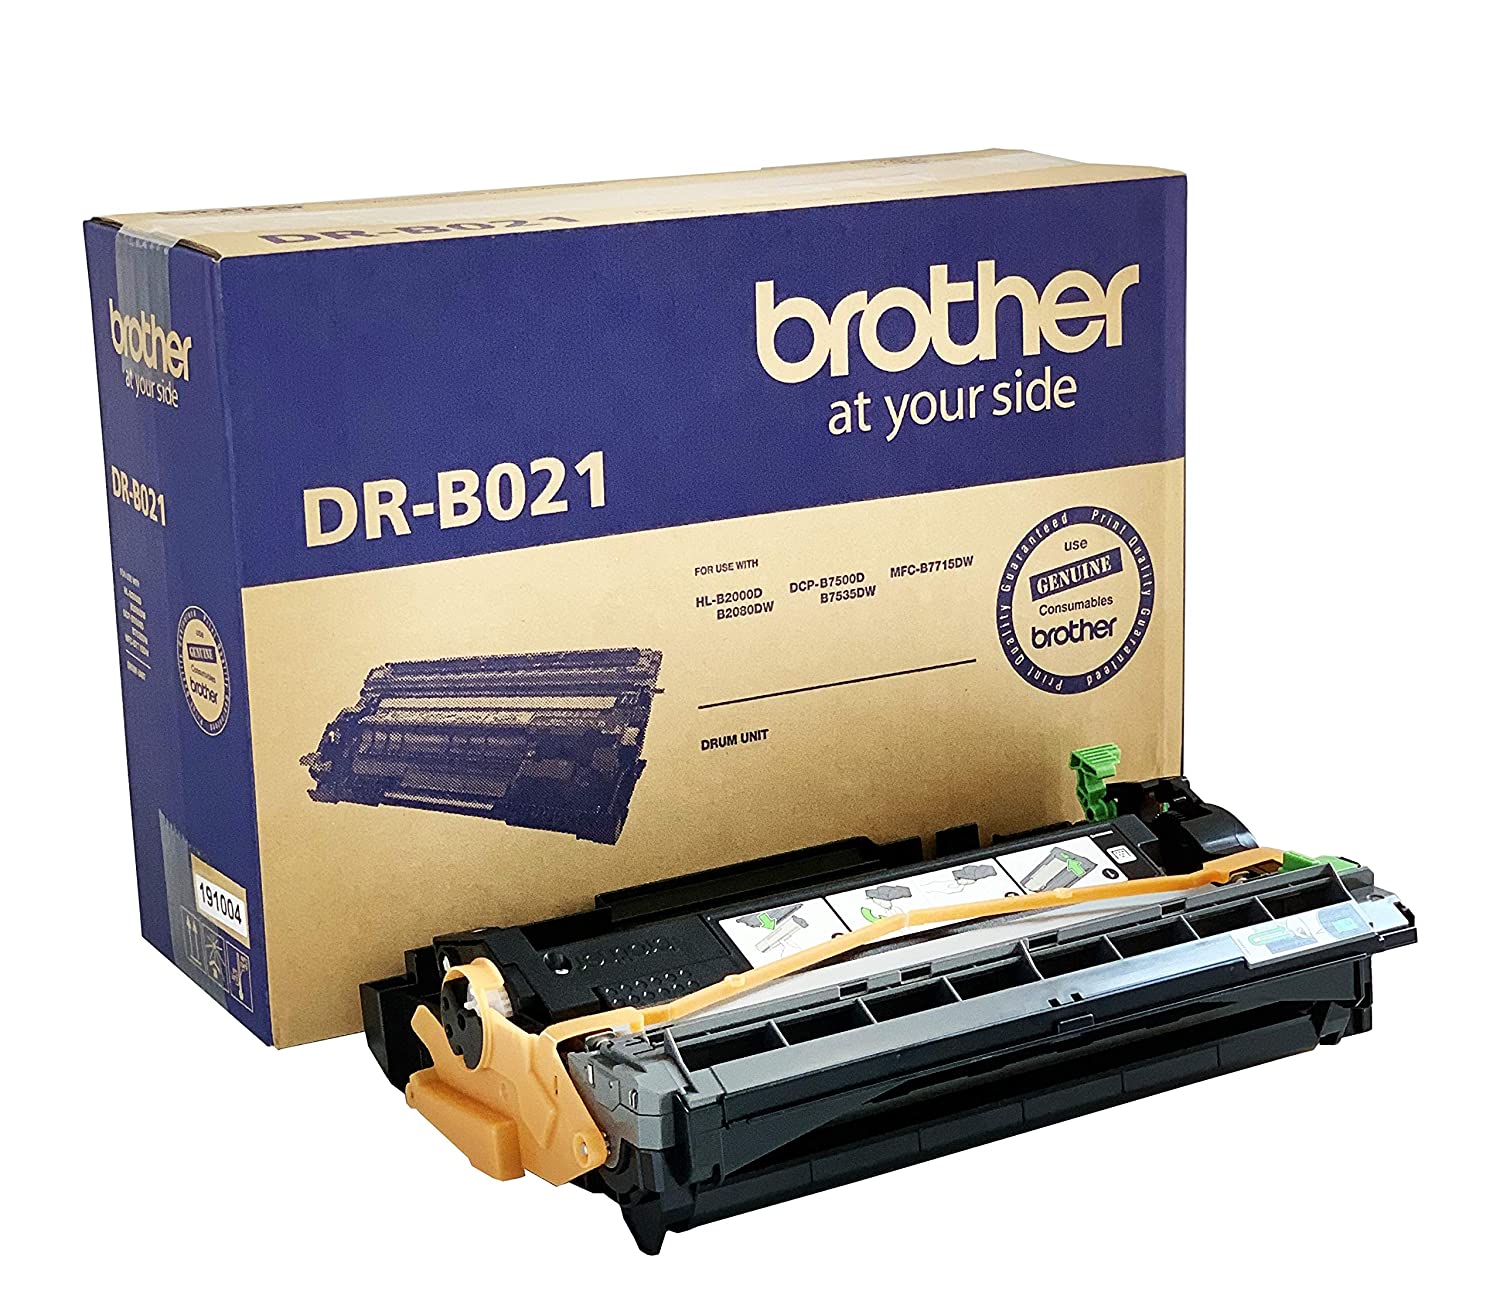 Brother B021 Toner & Drum Cartridge